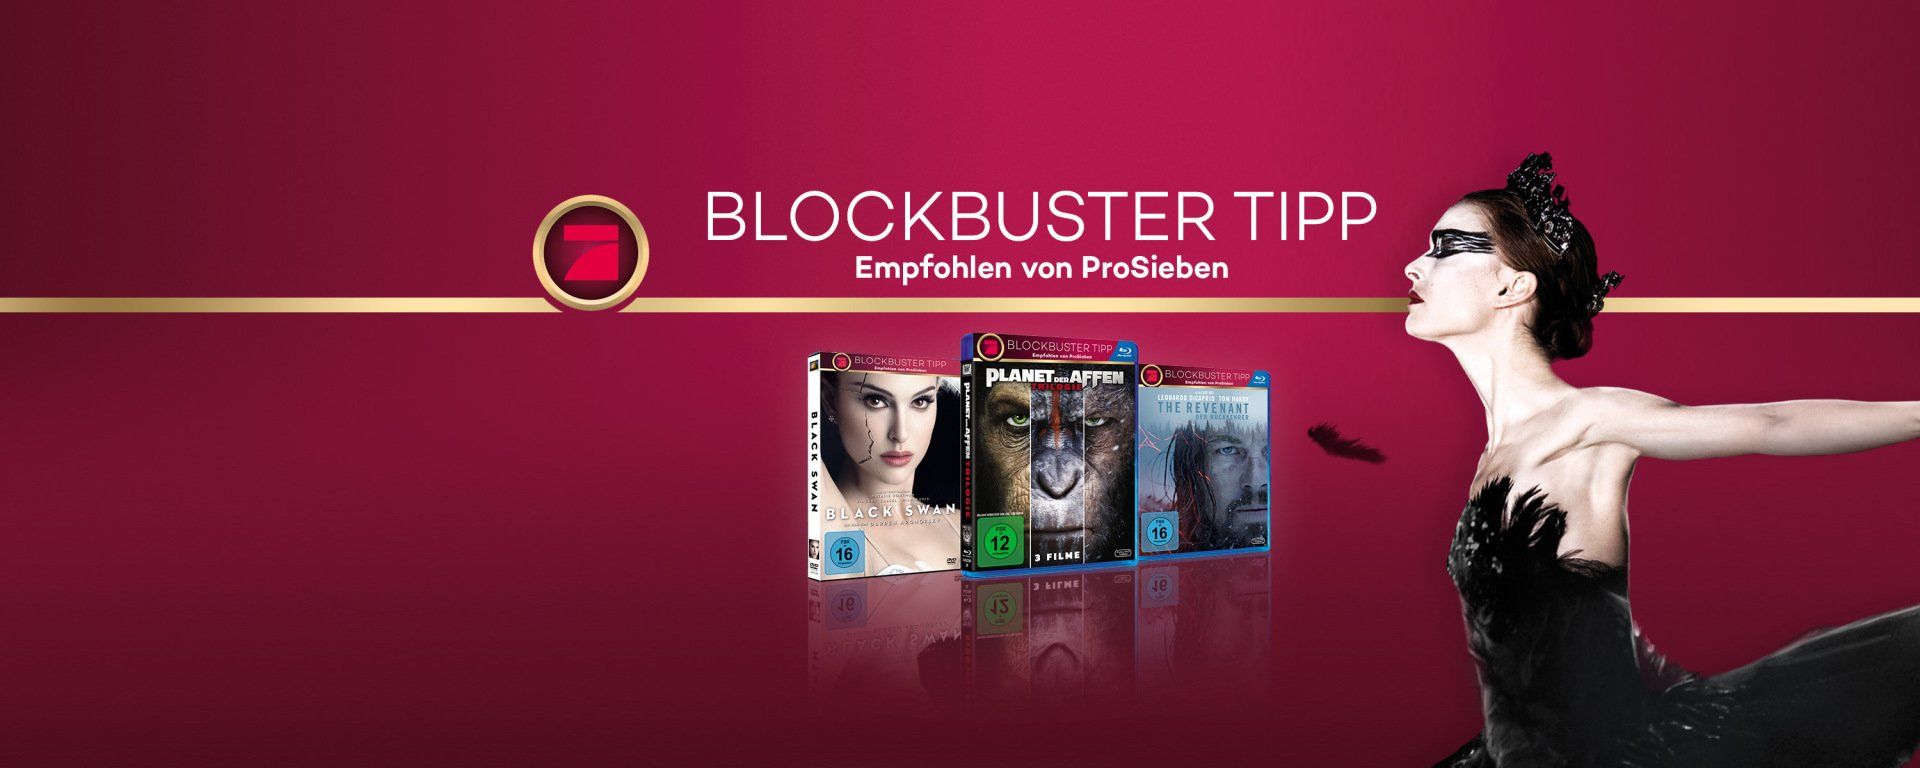 Pro7 Blockbuster Tipp, Twentieth Century Fox Home Entertainment